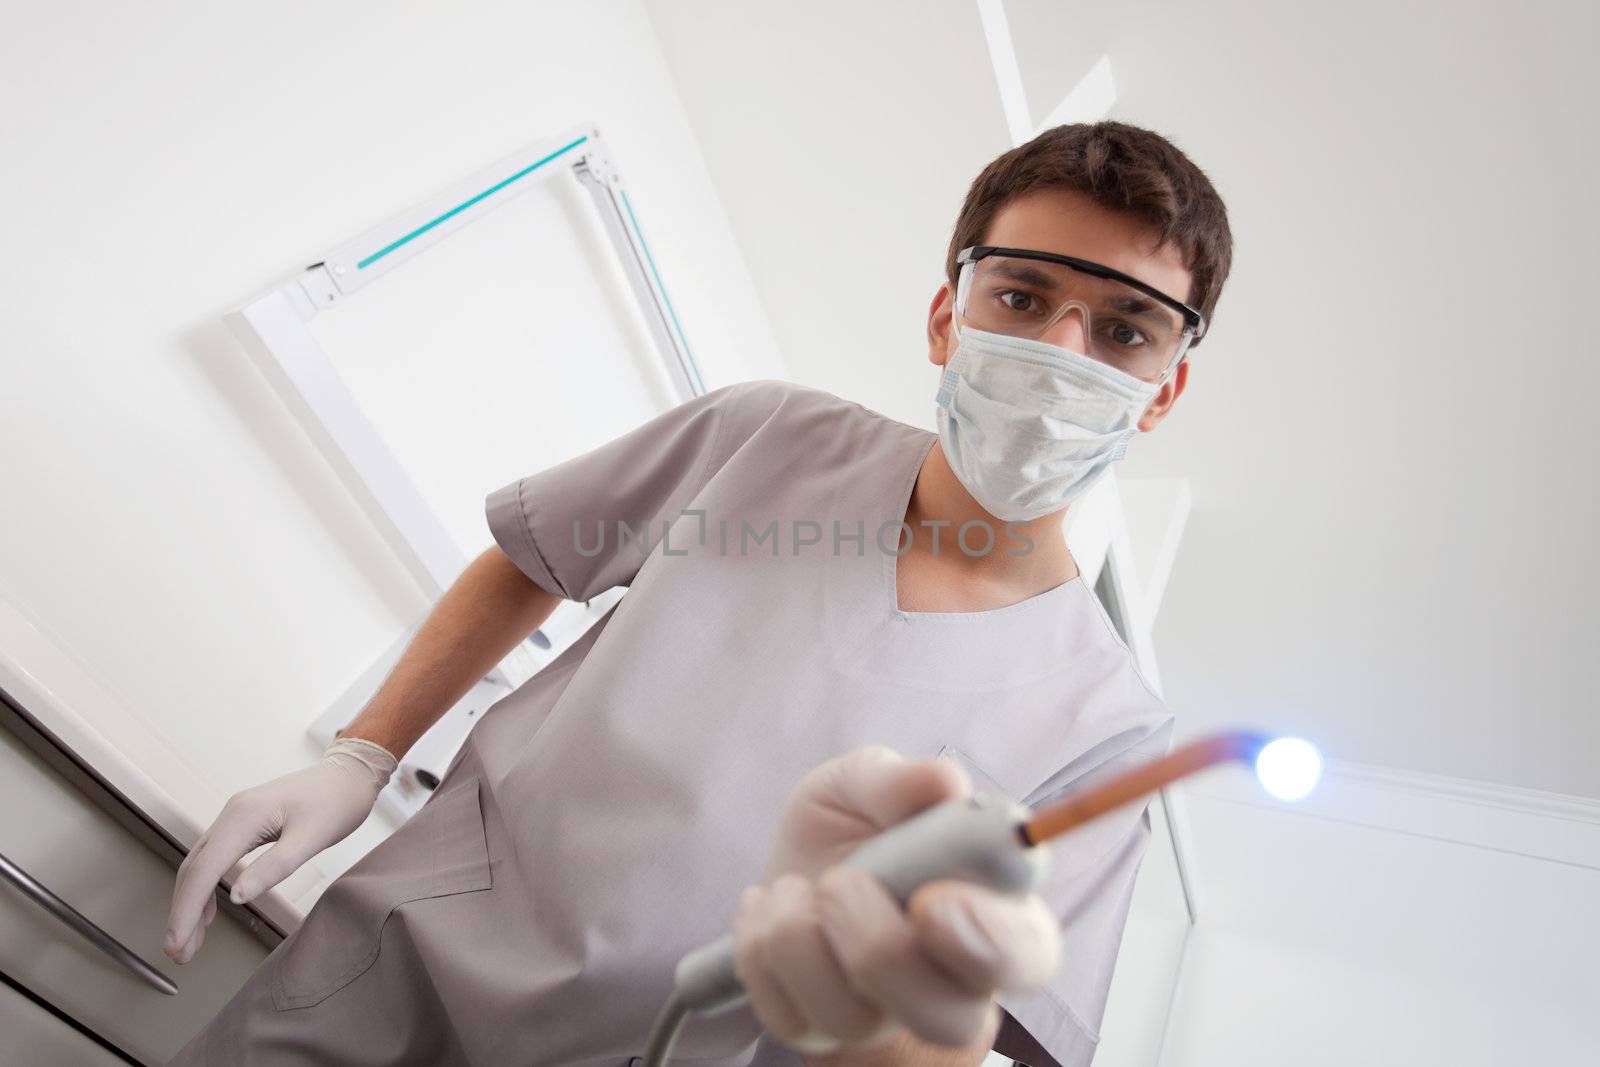 Dentist wearing mask holding medical equipment